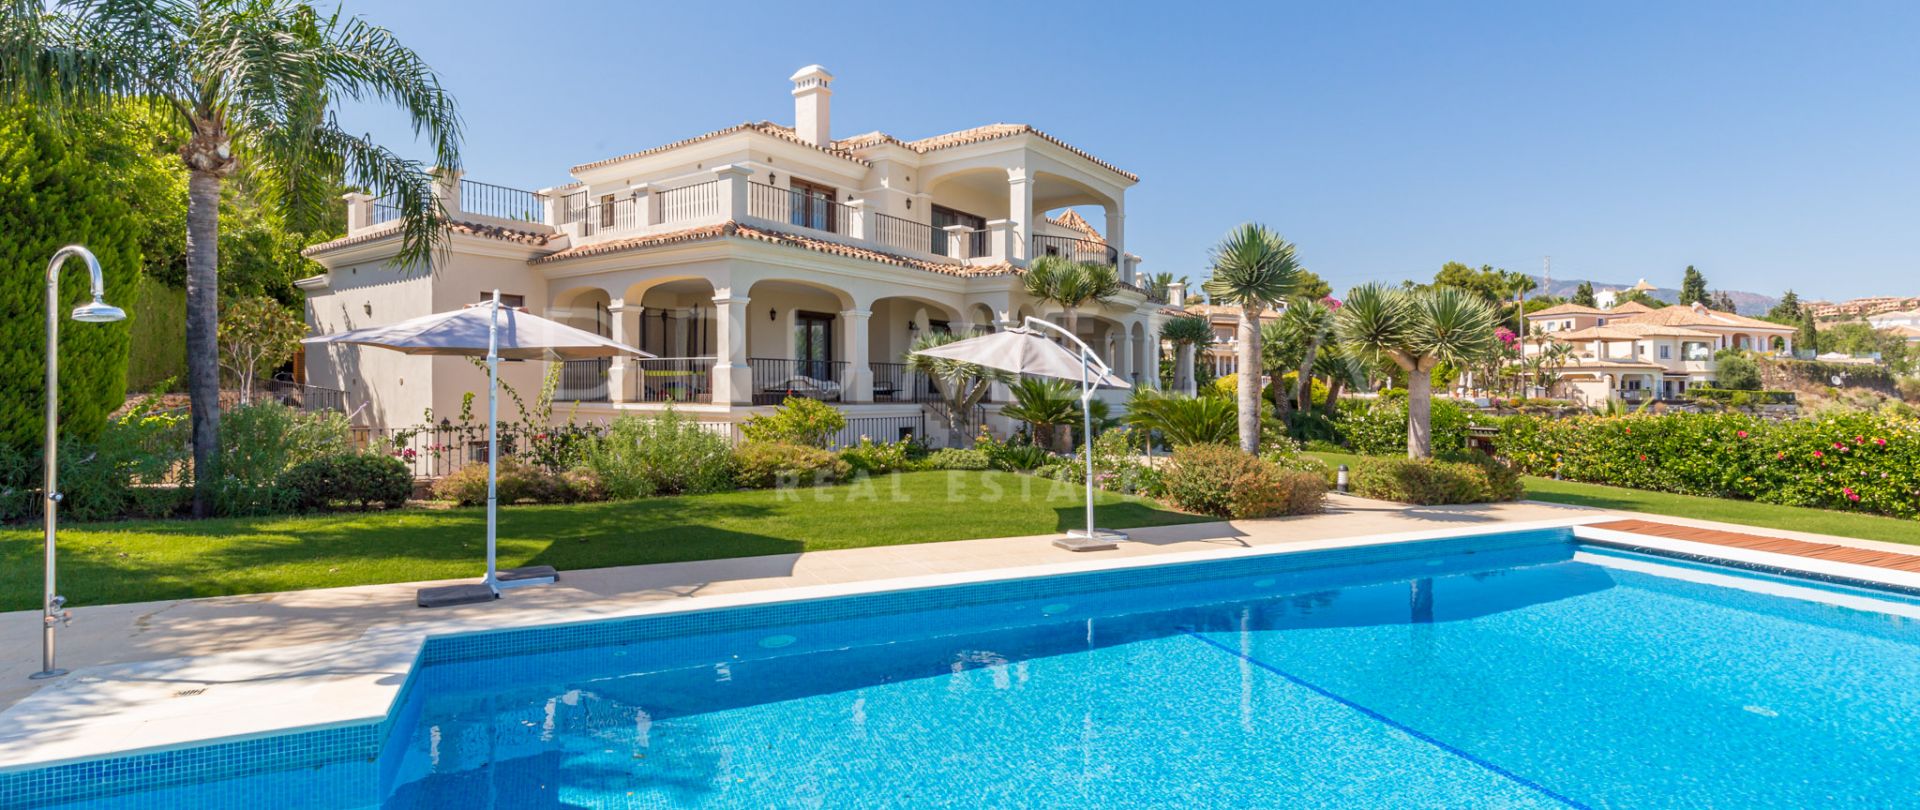 Outstanding renovated luxury villa with spectacular panoramic views in El Paraiso Alto, Benahavis